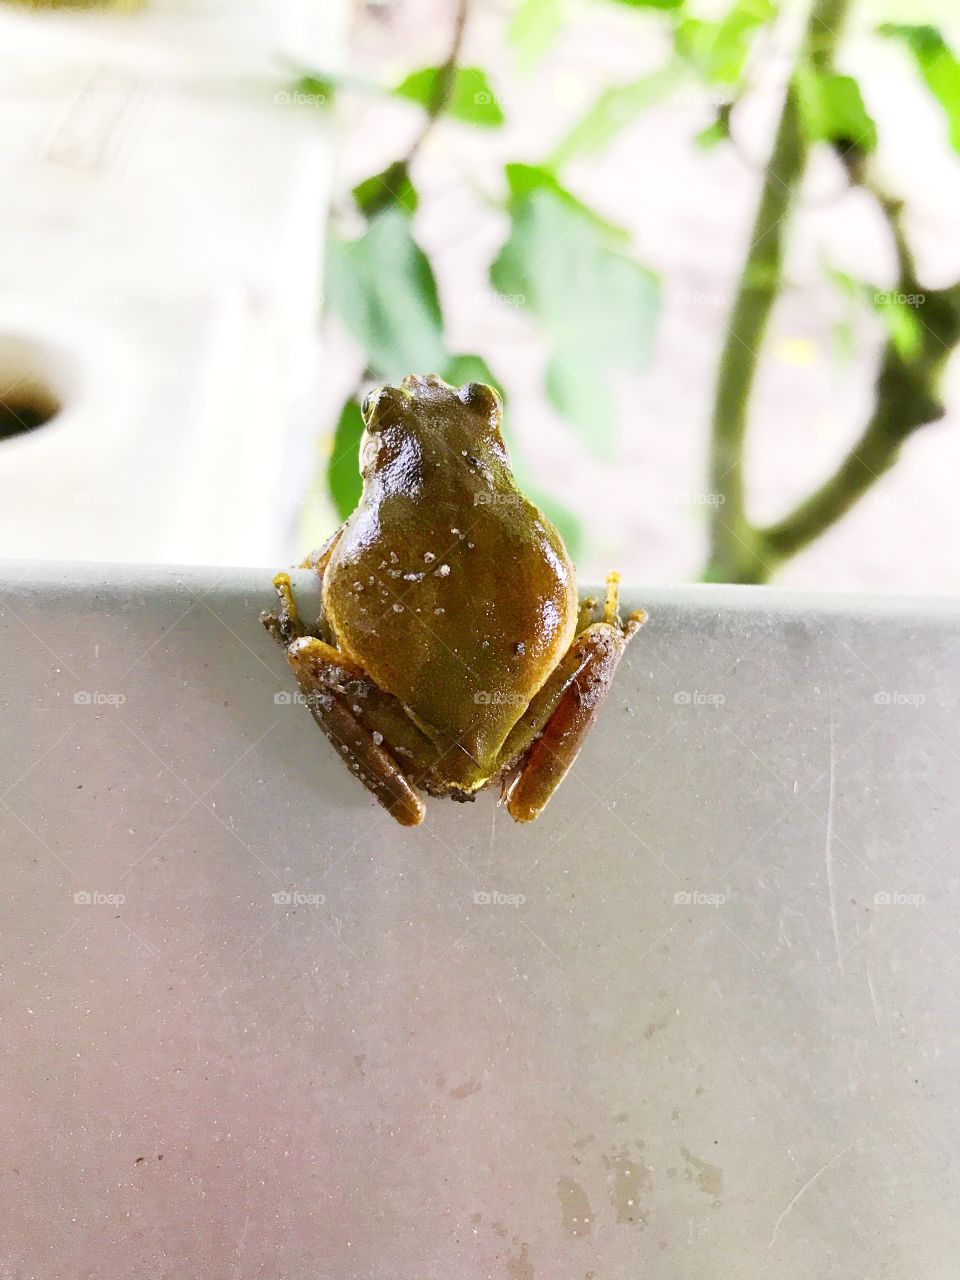 Froggy 